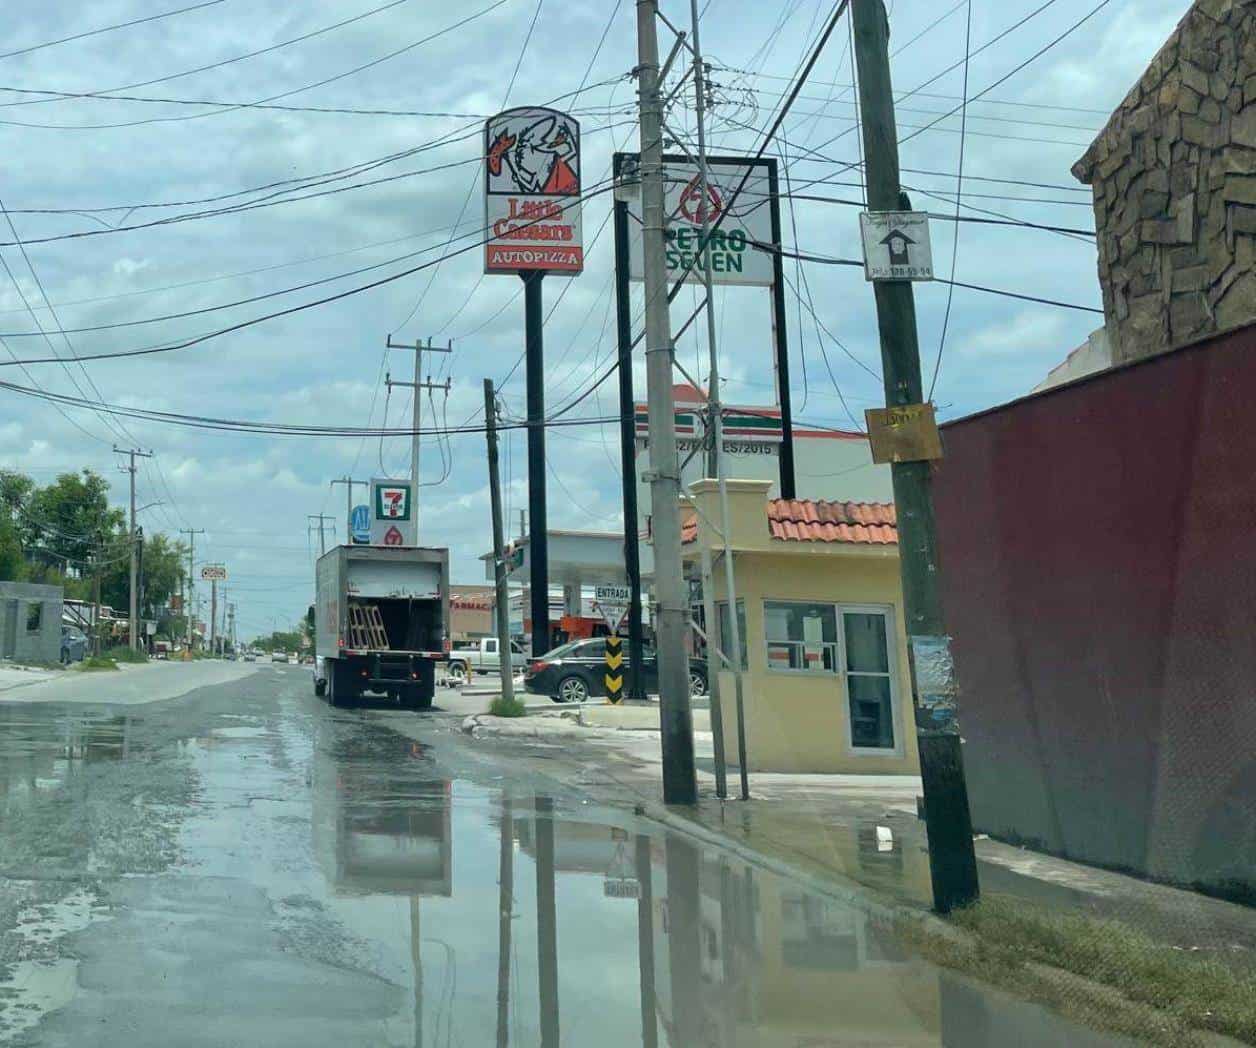 Fraccionamiento Moderno de Reynosa, con fuga de aguas negras